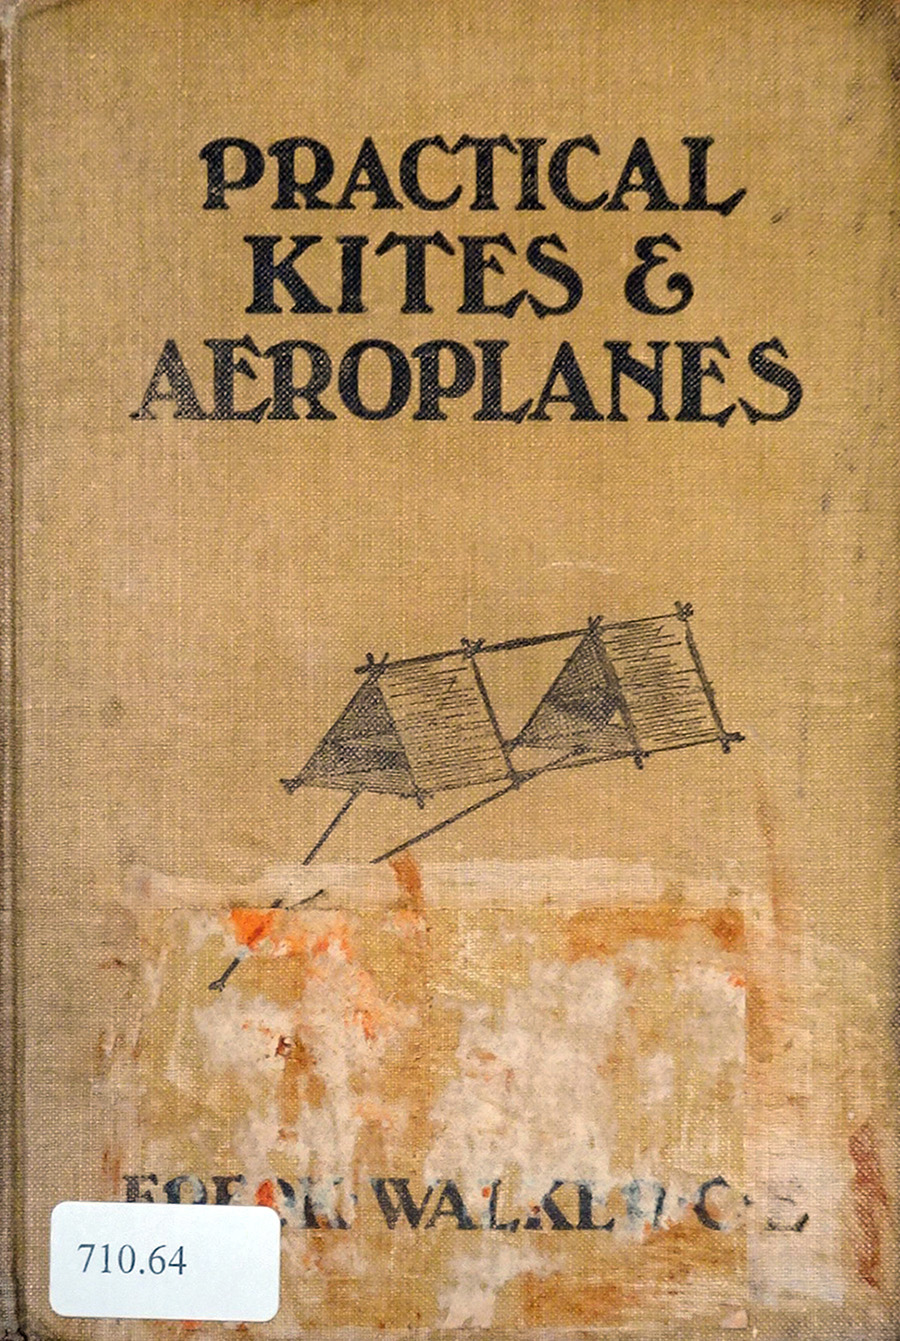 practical kites and aeroplanes